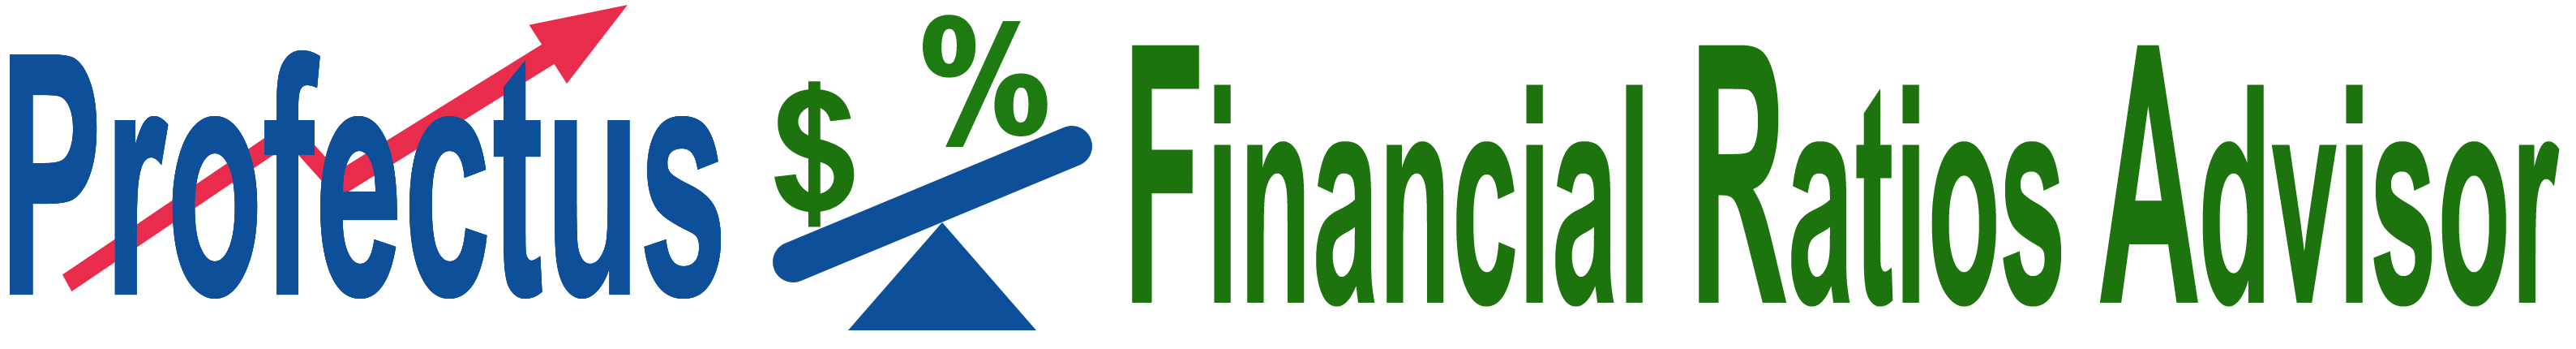 Financial Ratios Advisor logo